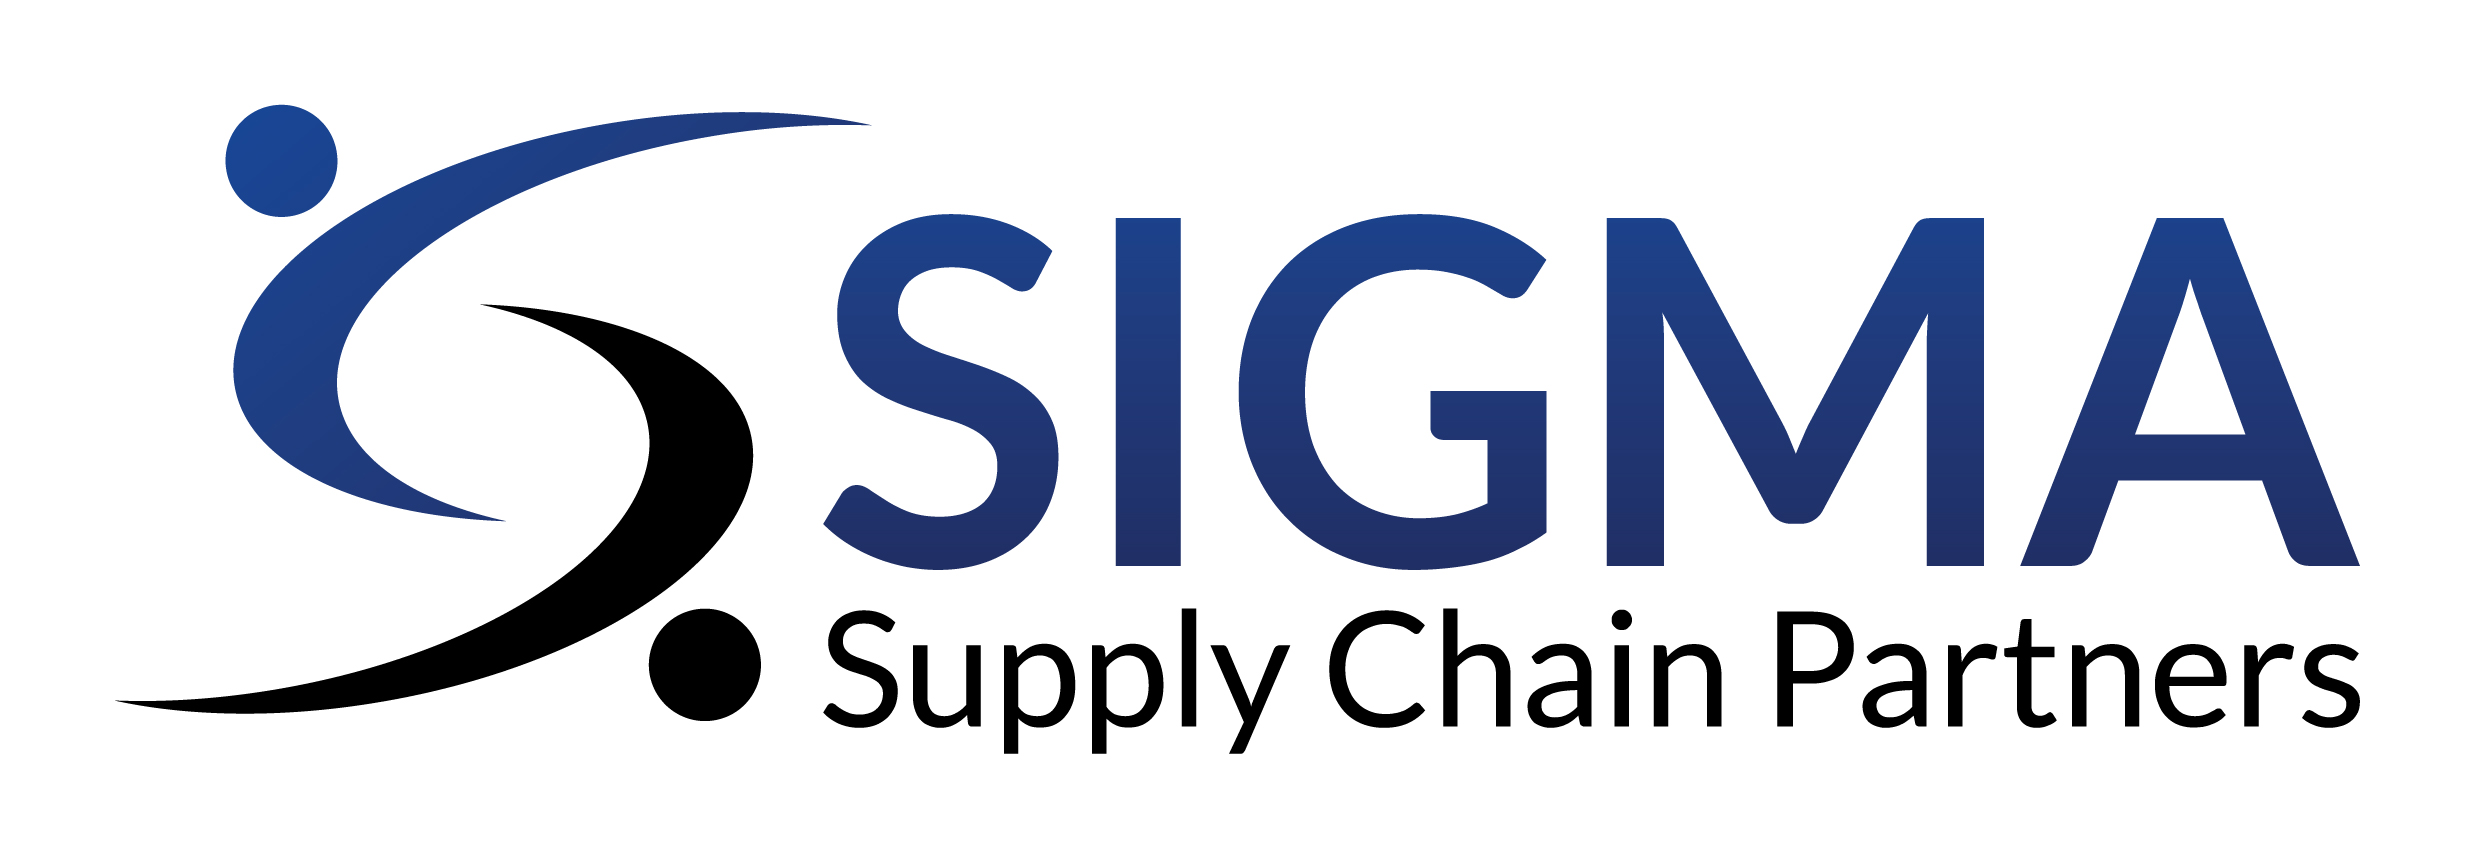 EC&O - Supply Chain Management